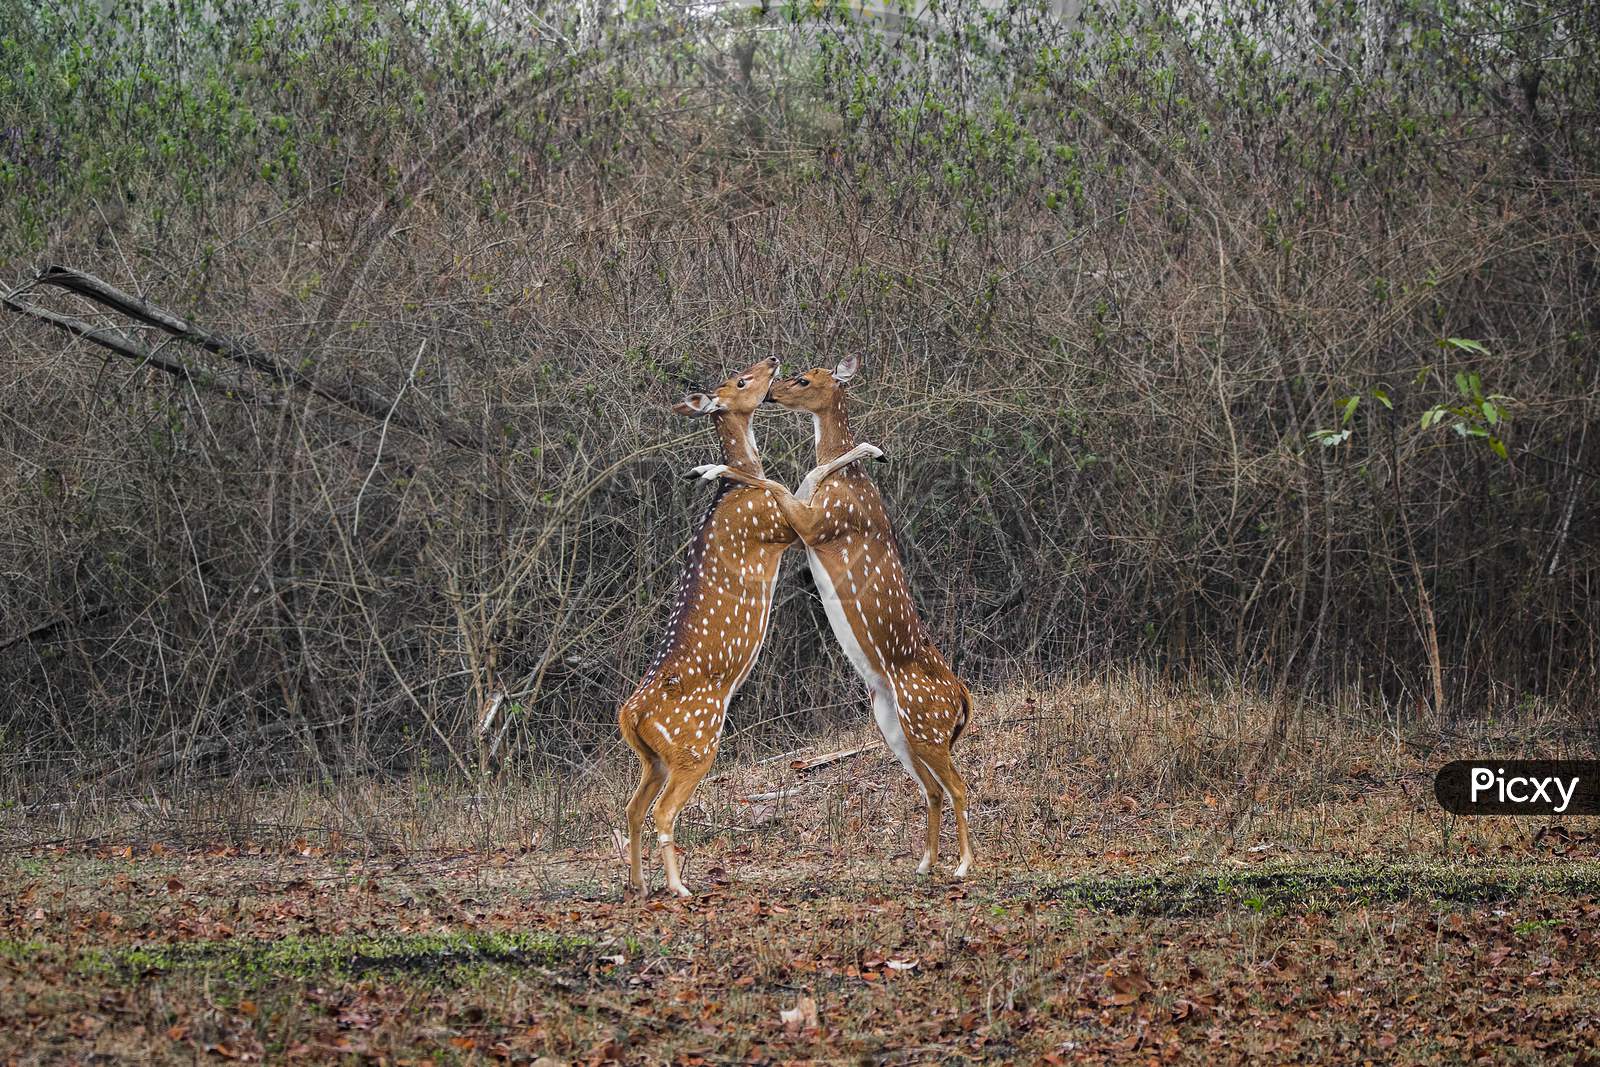 Spotted deer fighting